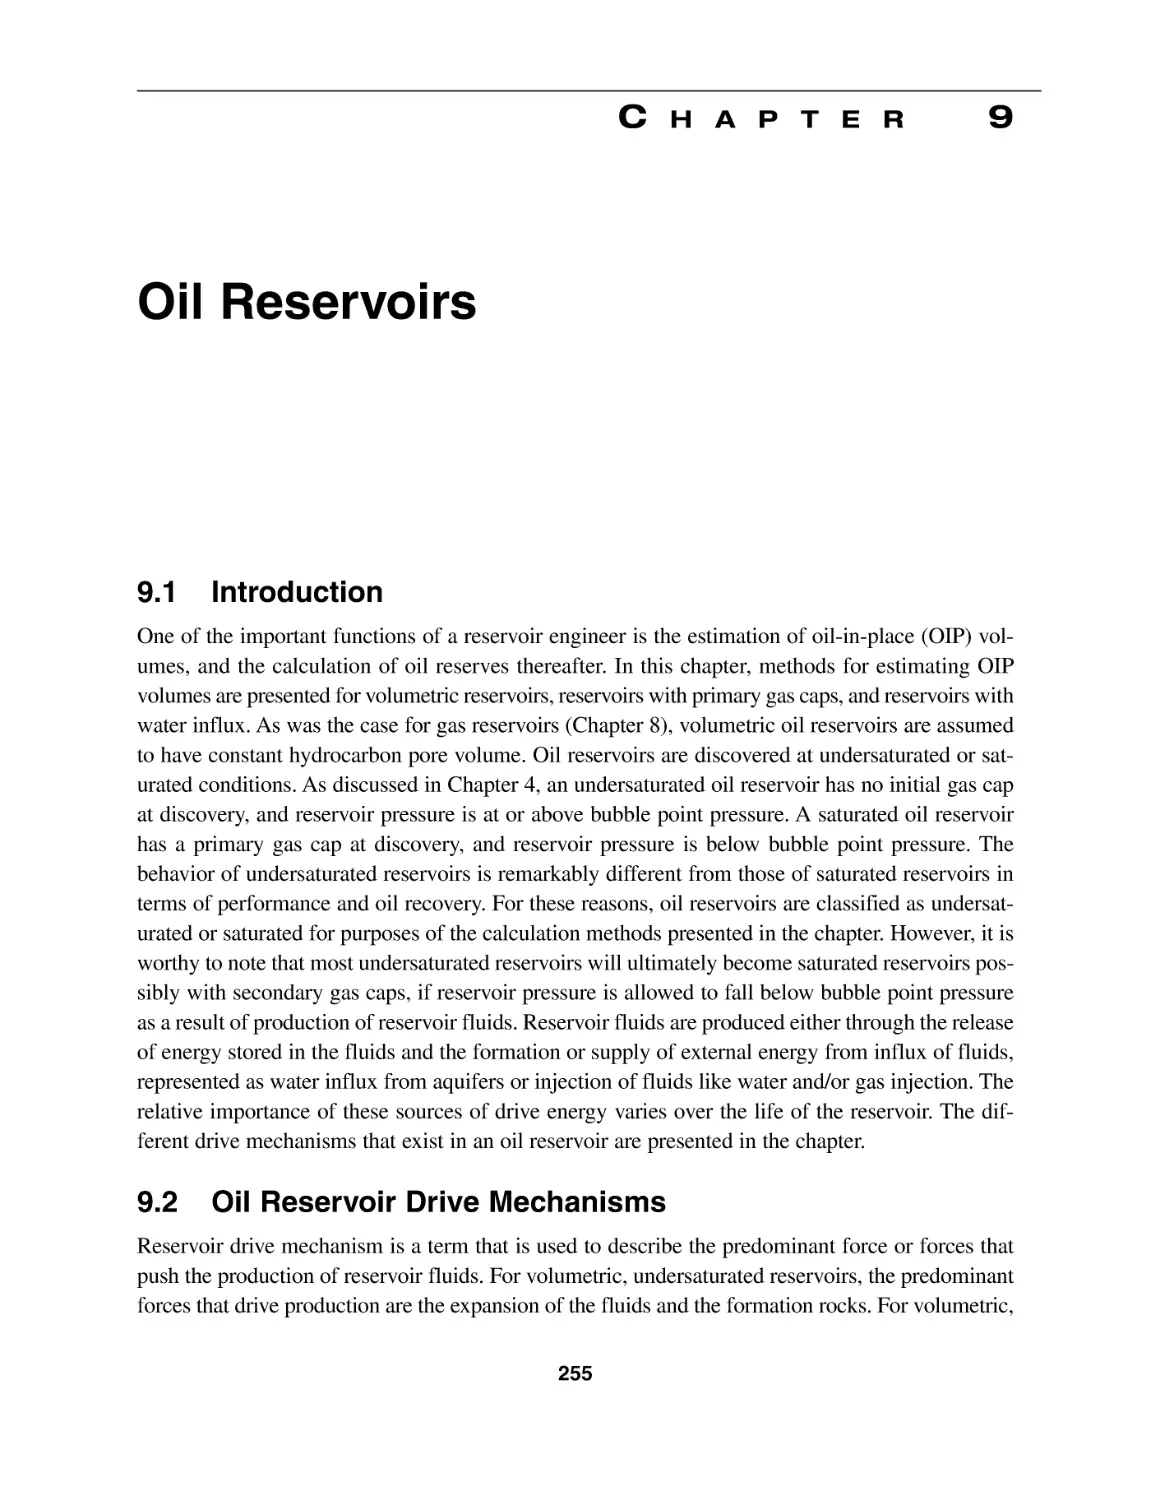 Chapter 9 Oil Reservoirs
9.1 Introduction
9.2 Oil Reservoir Drive Mechanisms